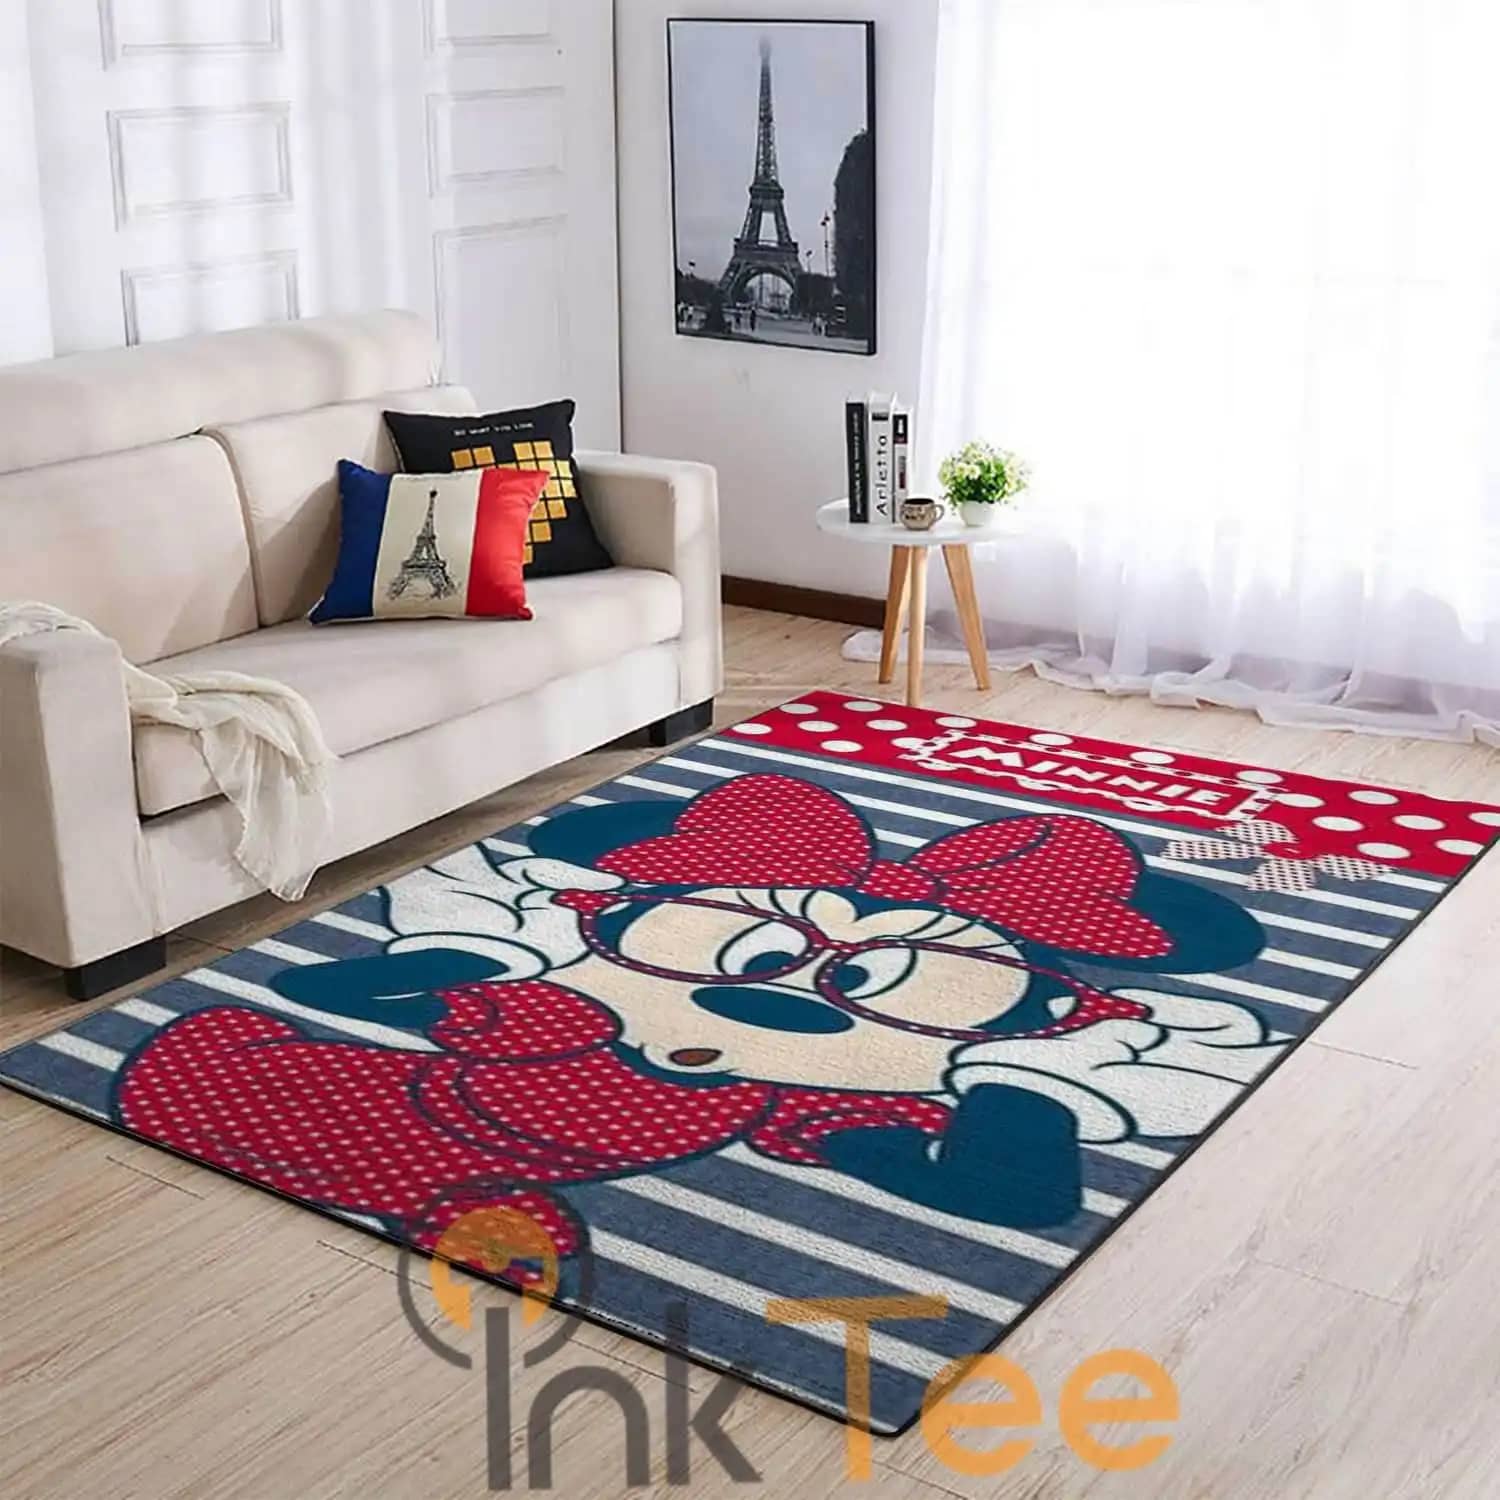 Cute Minnie Mickey Living Room Area Amazon Best Seller 4111 Rug